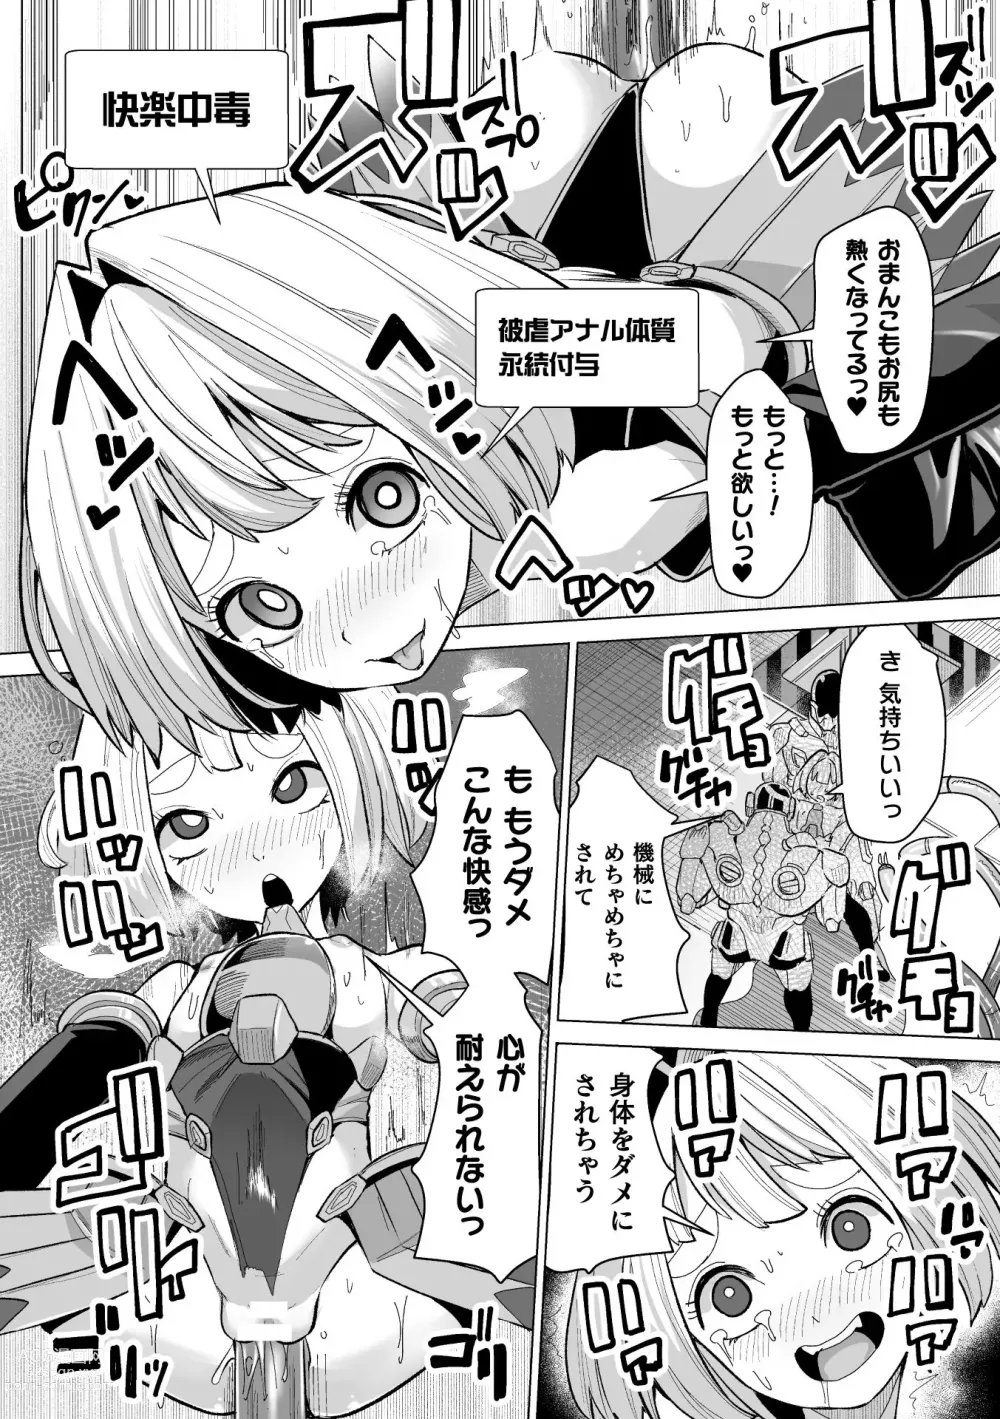 Page 22 of manga Mesugaki mitchiri ecchi